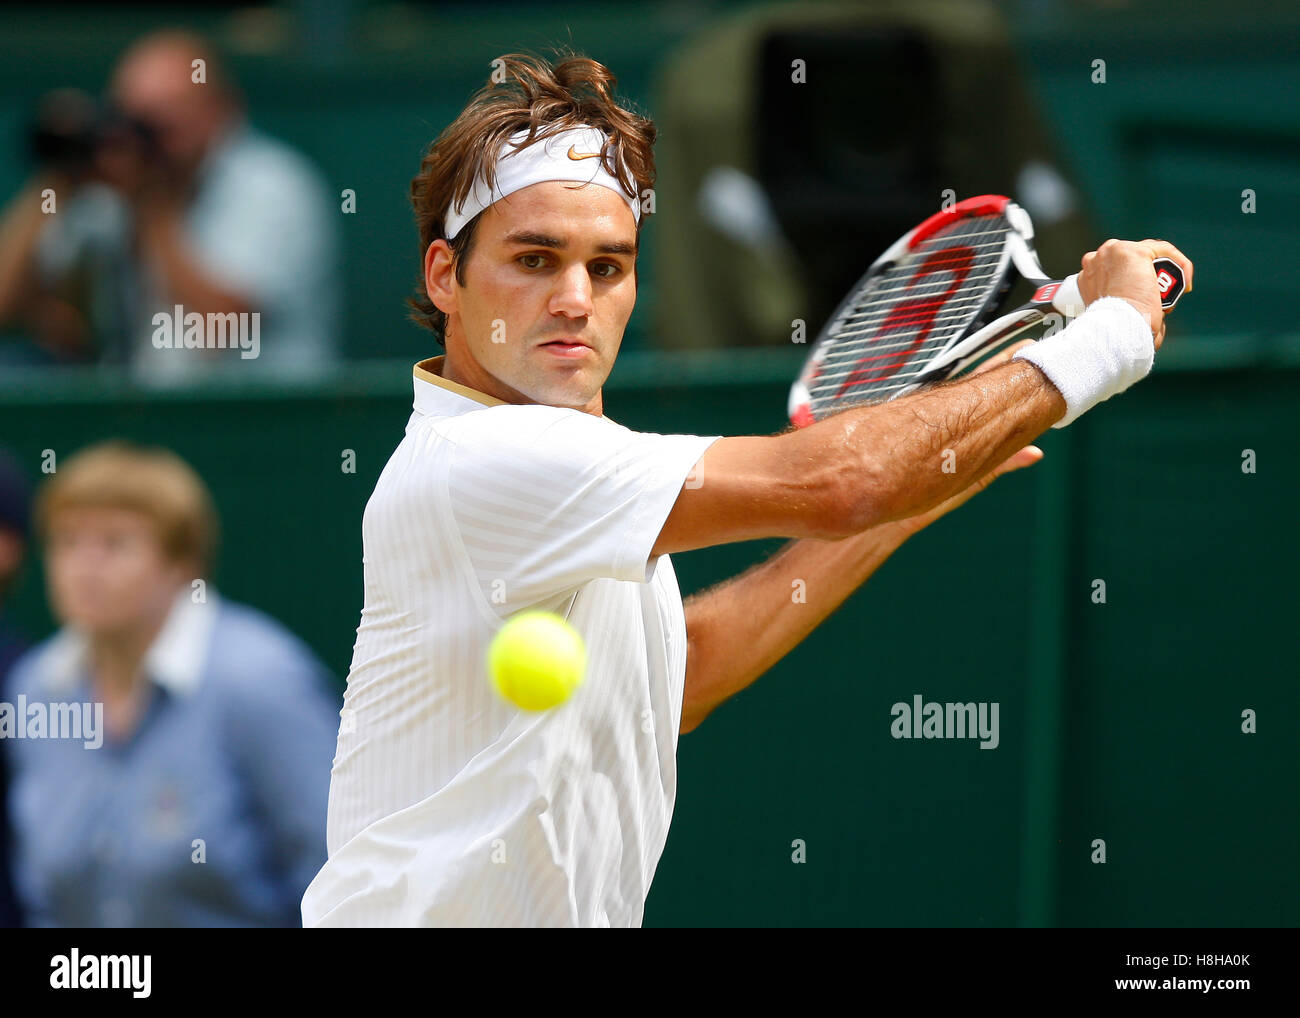 Roger Federer, Schweiz, Tennis, ITF Grand-Slam-Turnier, Wimbledon 2009,  Großbritannien, Europa Stockfotografie - Alamy